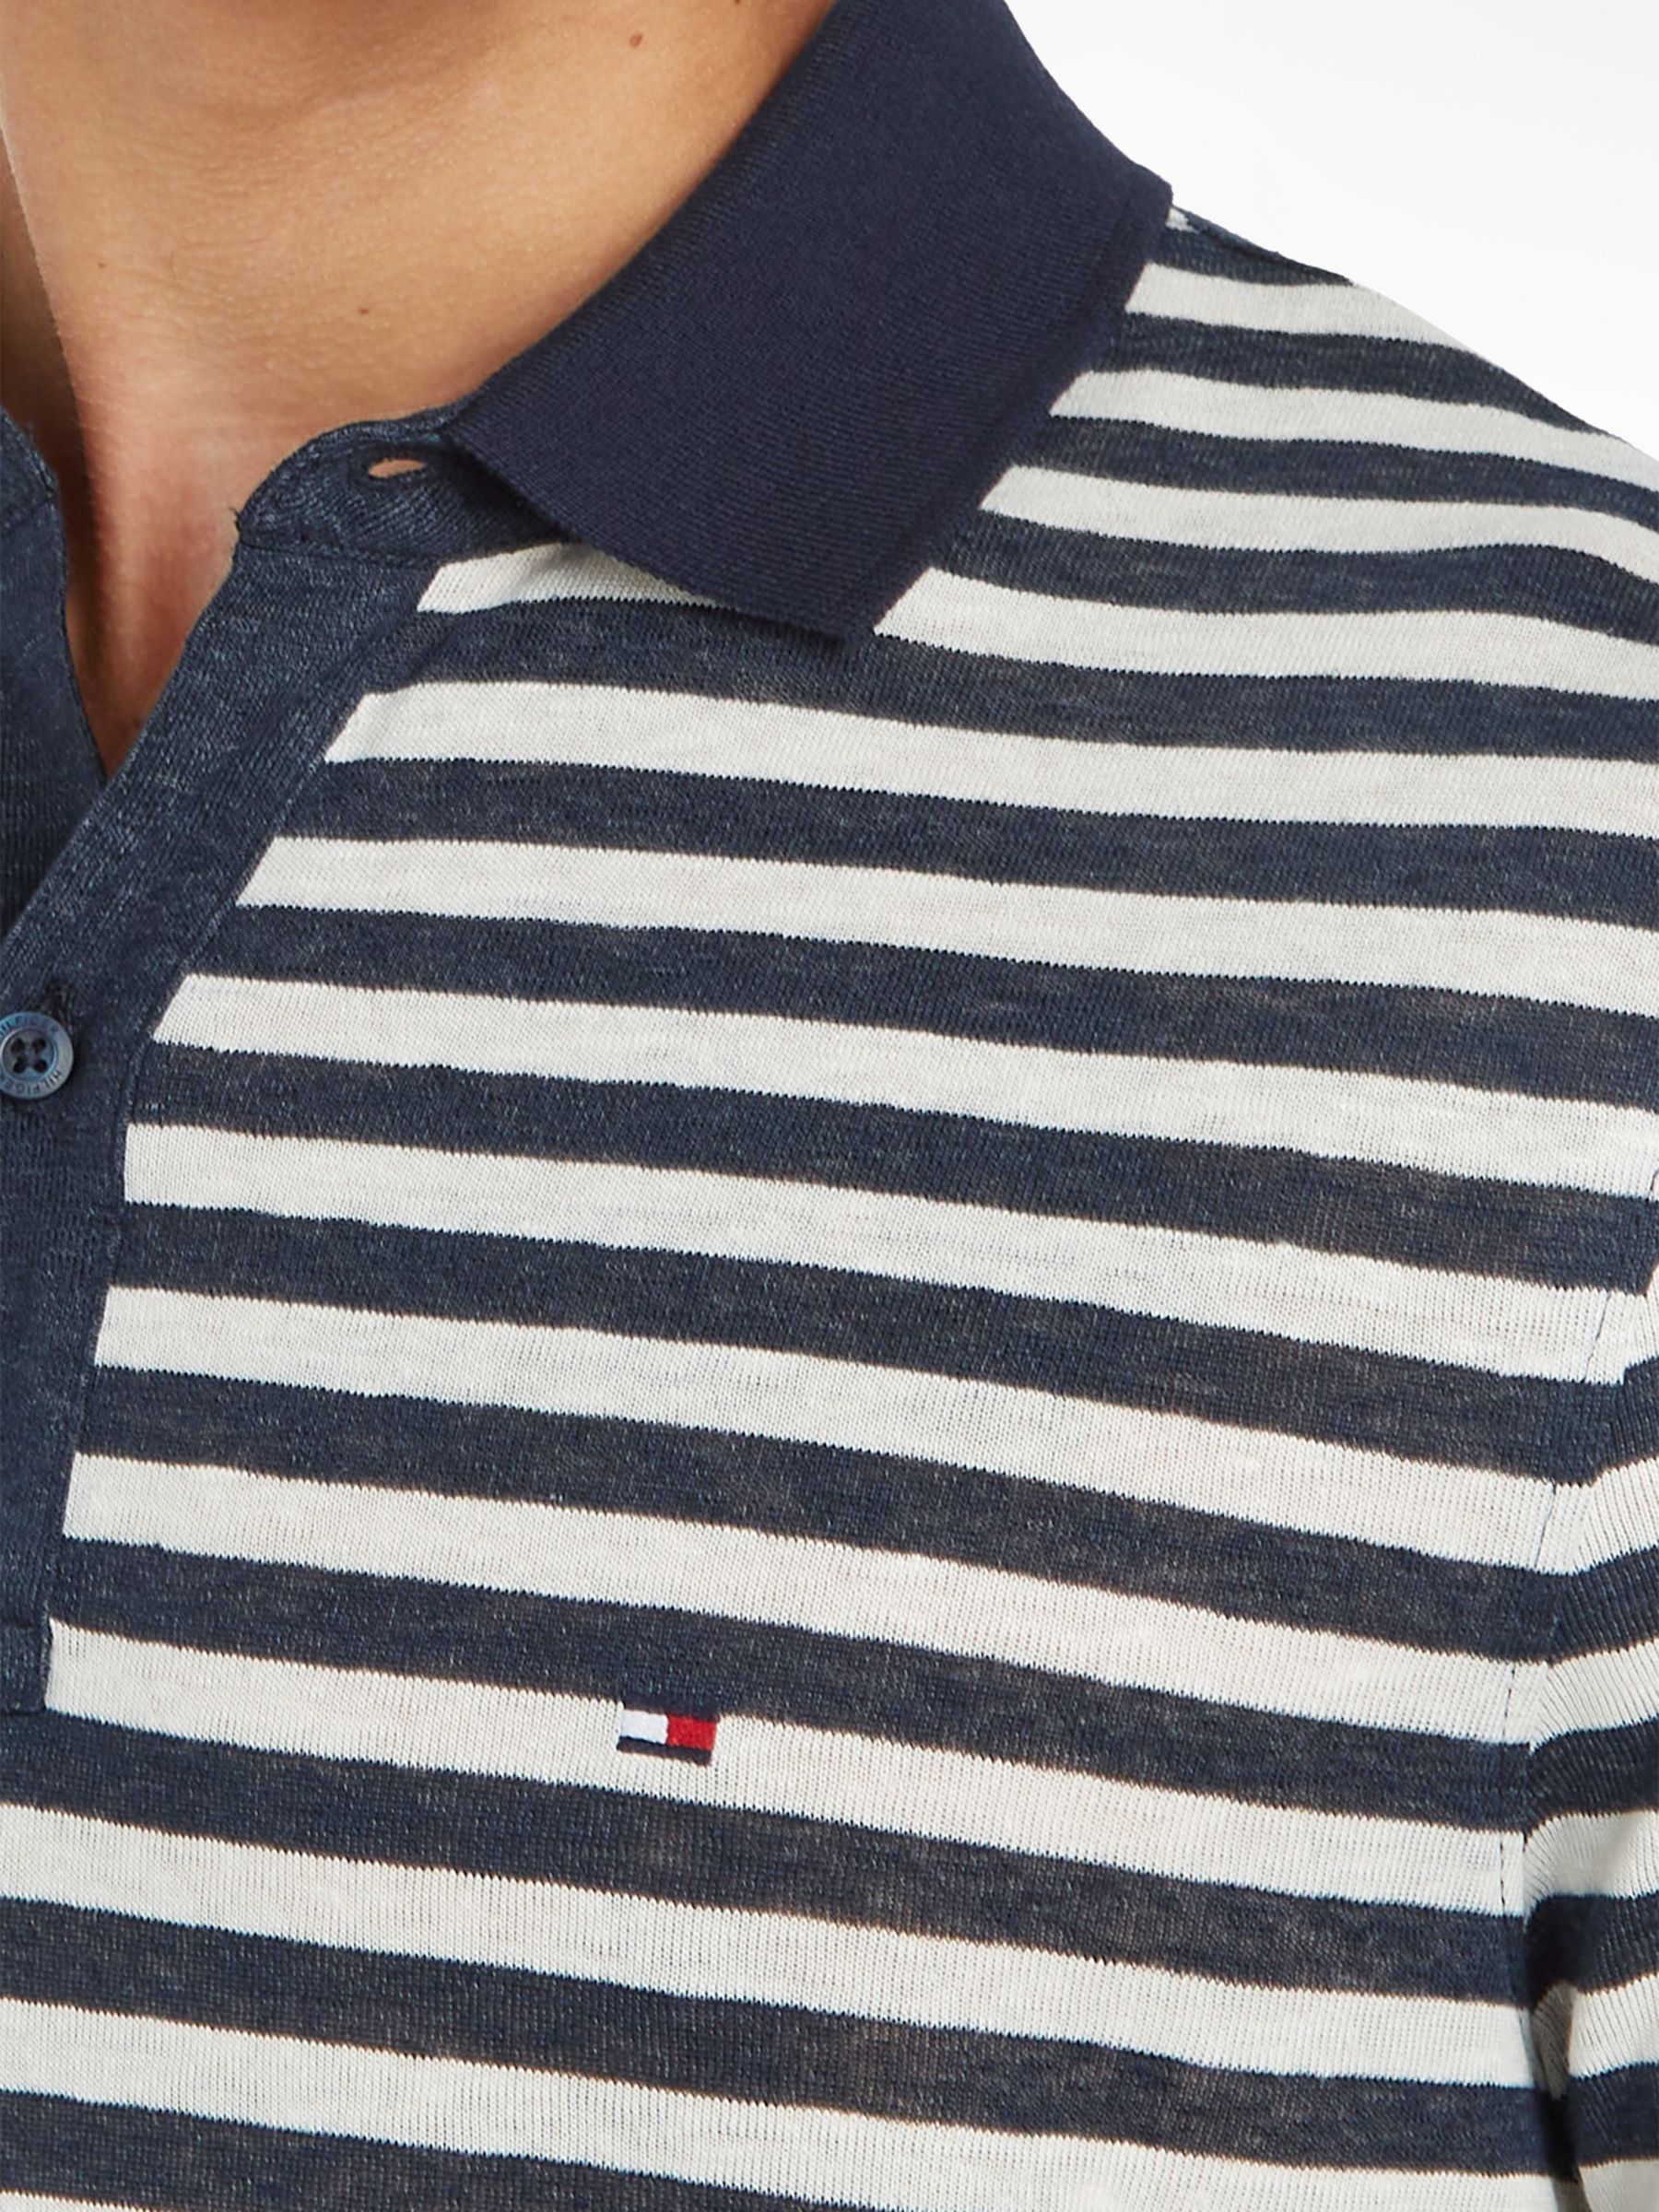 Tommy Hilfiger Breton Stripe Linen Polo Shirt, Desert Sky/White, XS